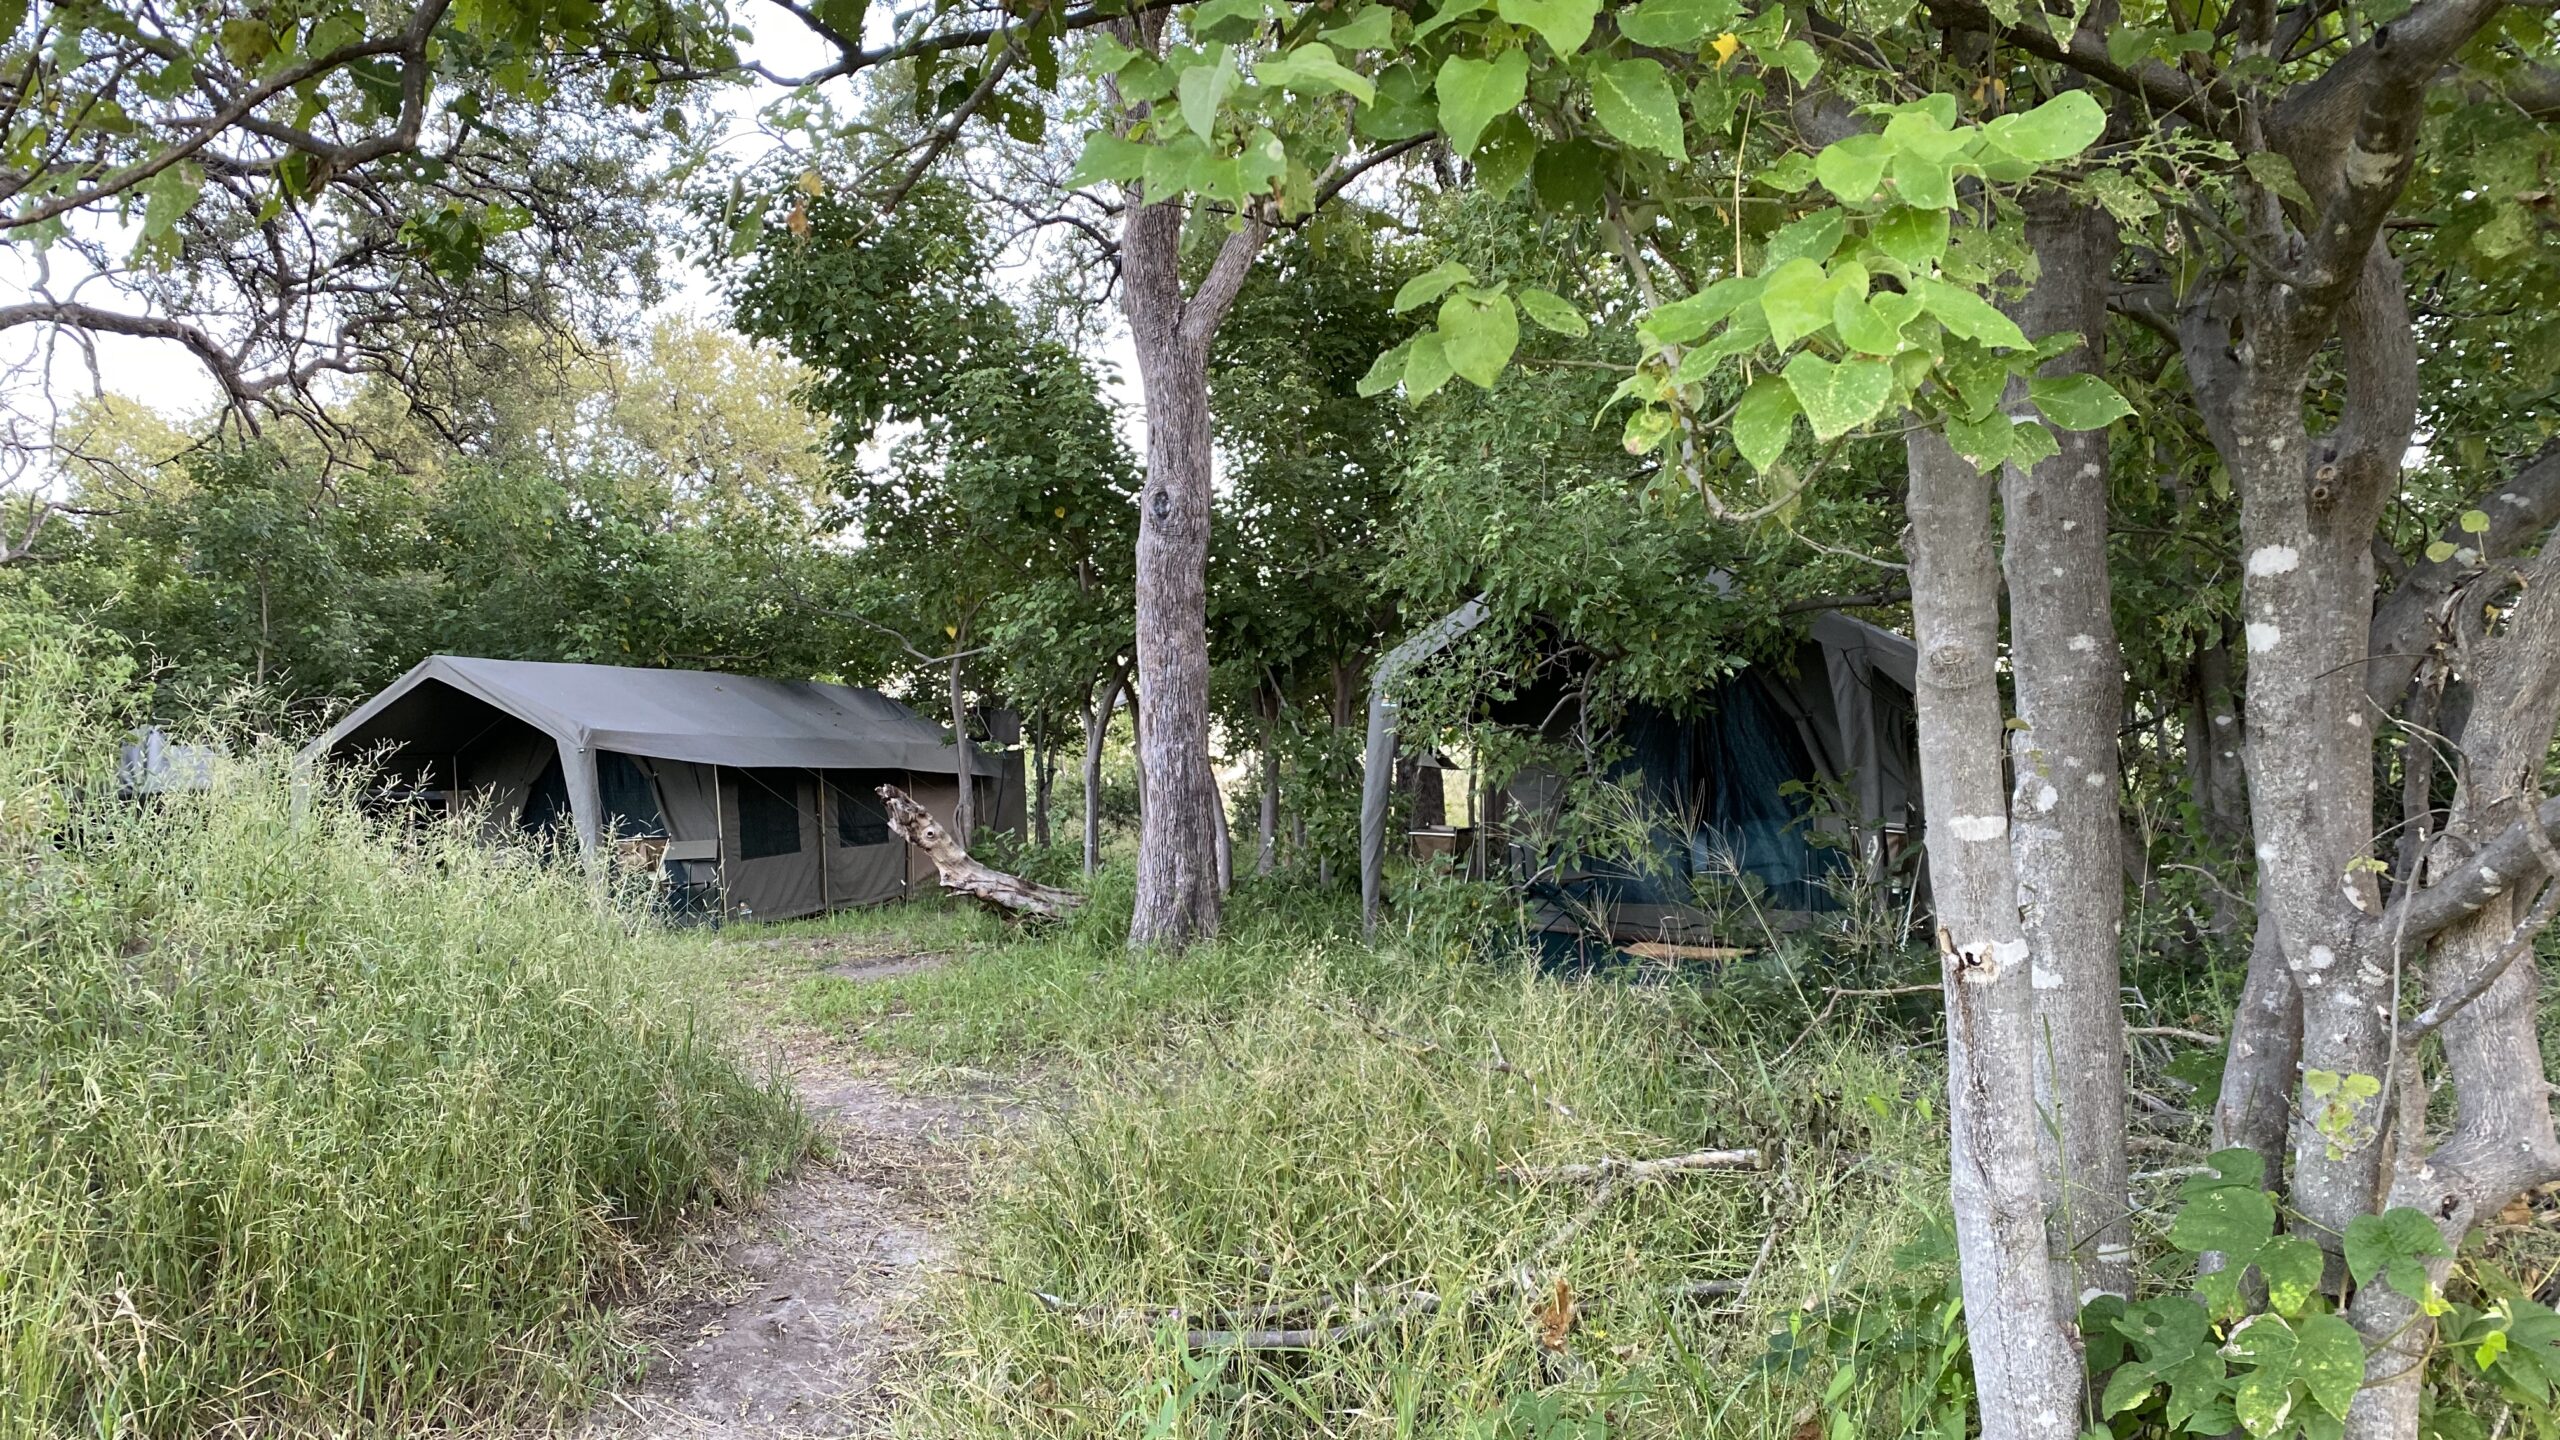 Brave Africa's camp is always in the best location in the Okavango Delta